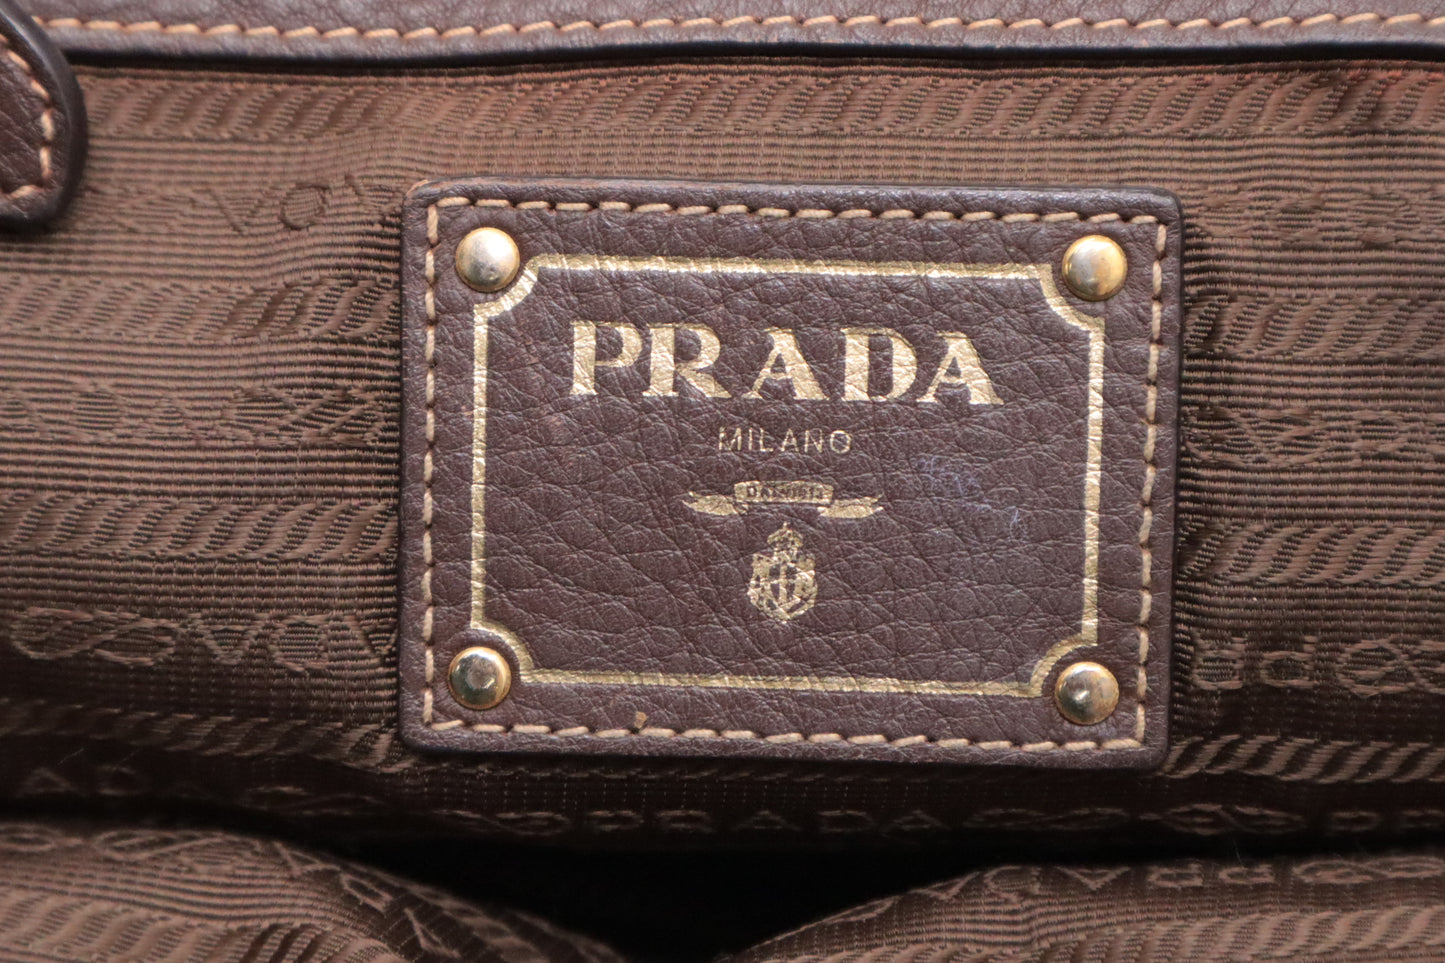 Prada Handbag in Brown Leather and Navy Denim Canvas